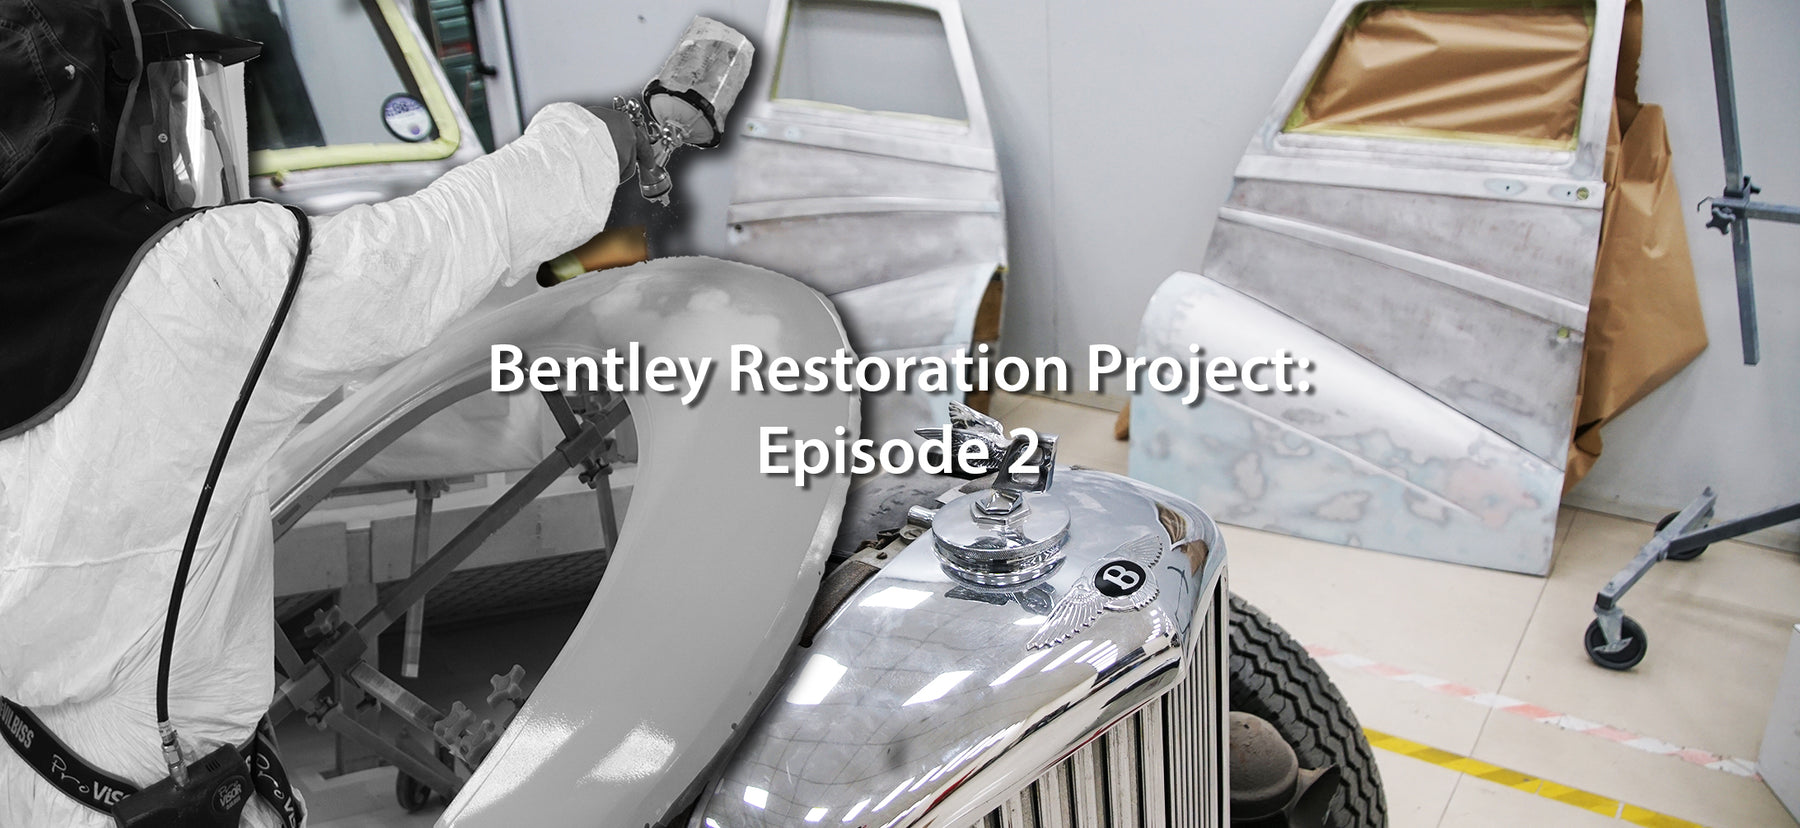 Bentley Restoration Project Continues